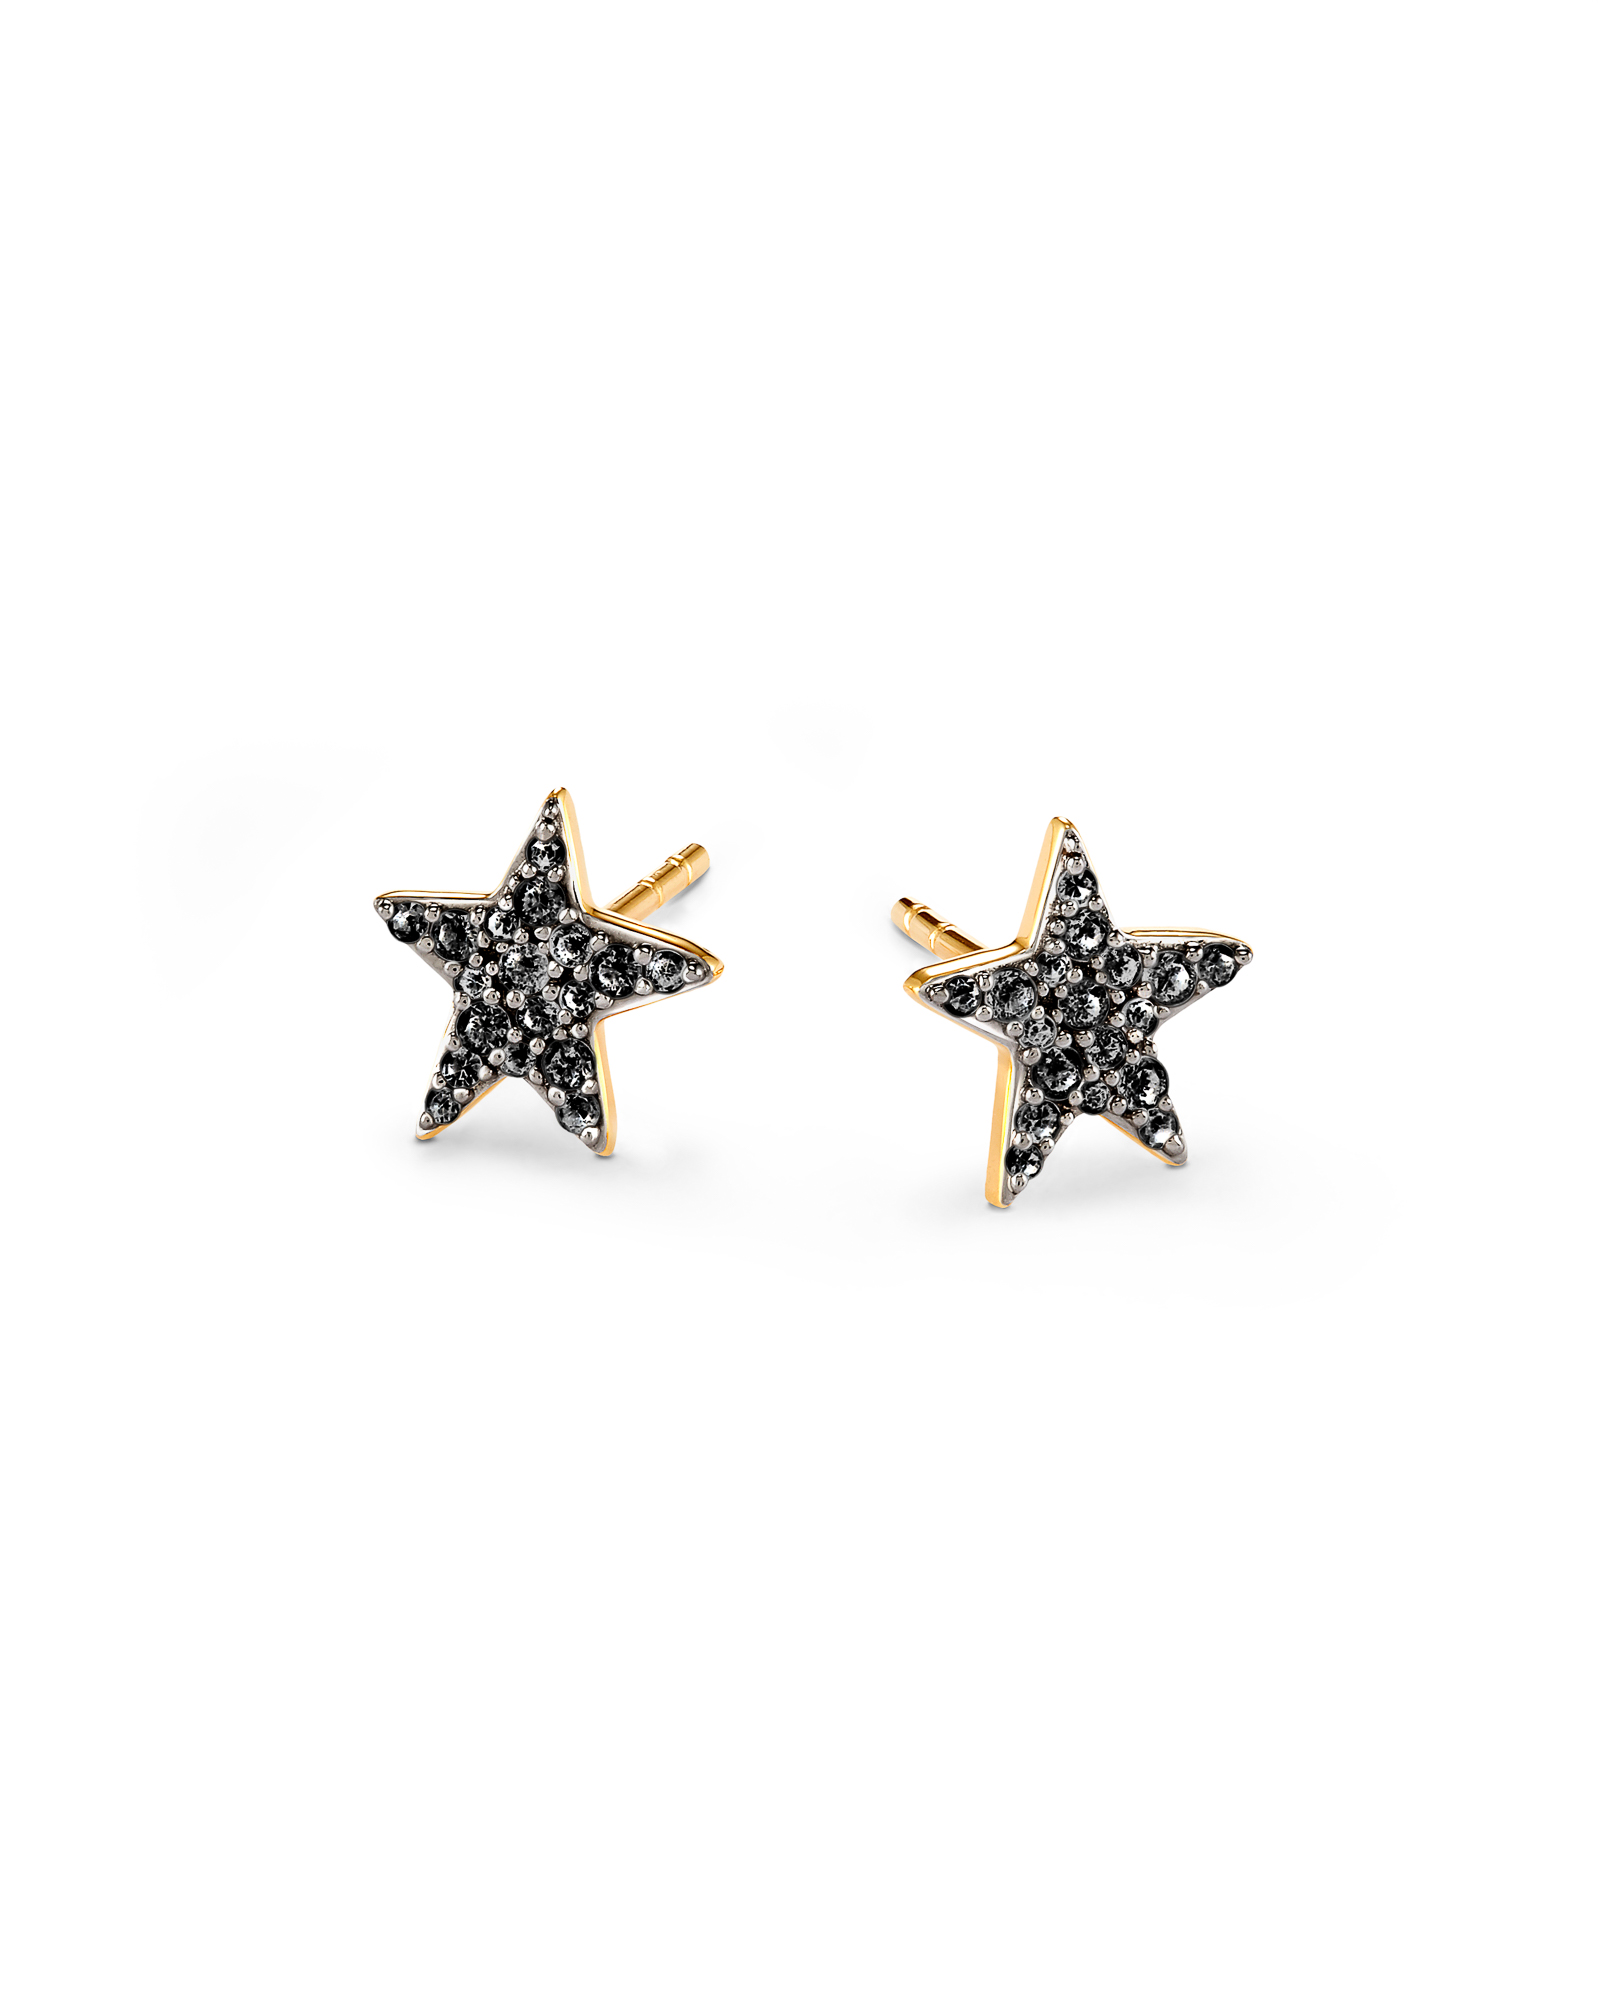 Pave CZ Hollow Star Earrings – Premium CZ